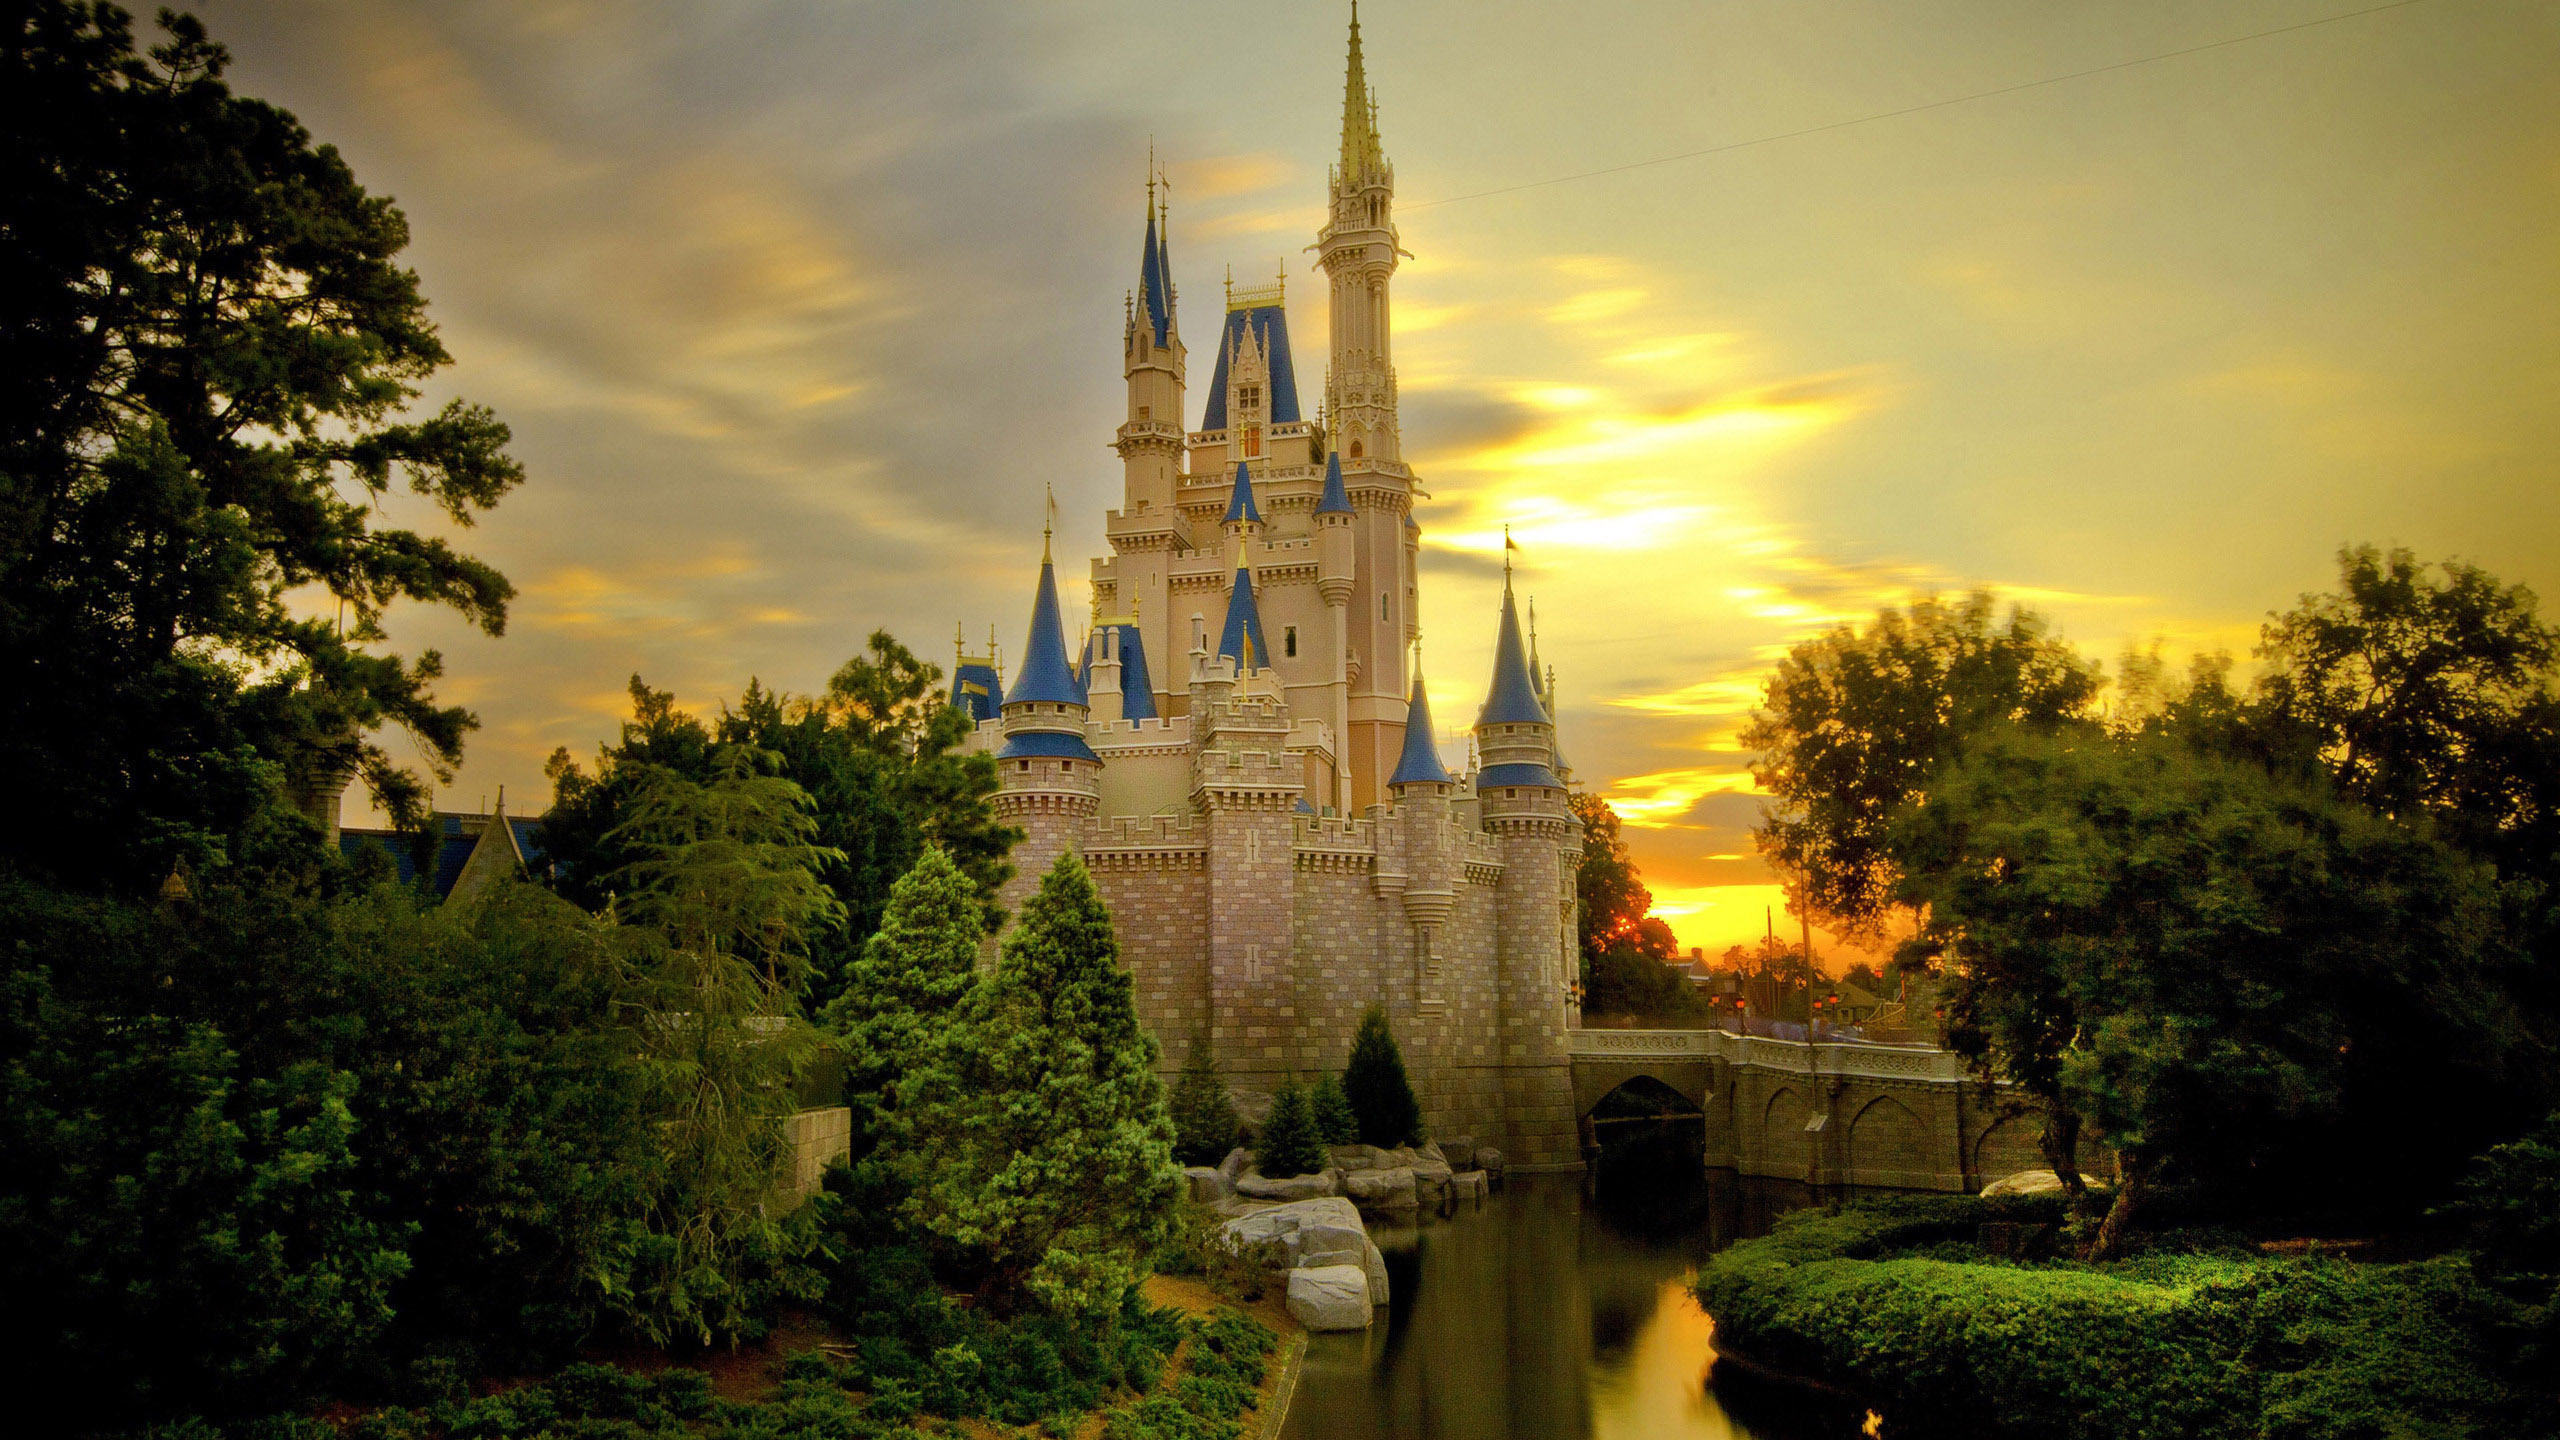 Free Download Disney Castle Backgrounds 